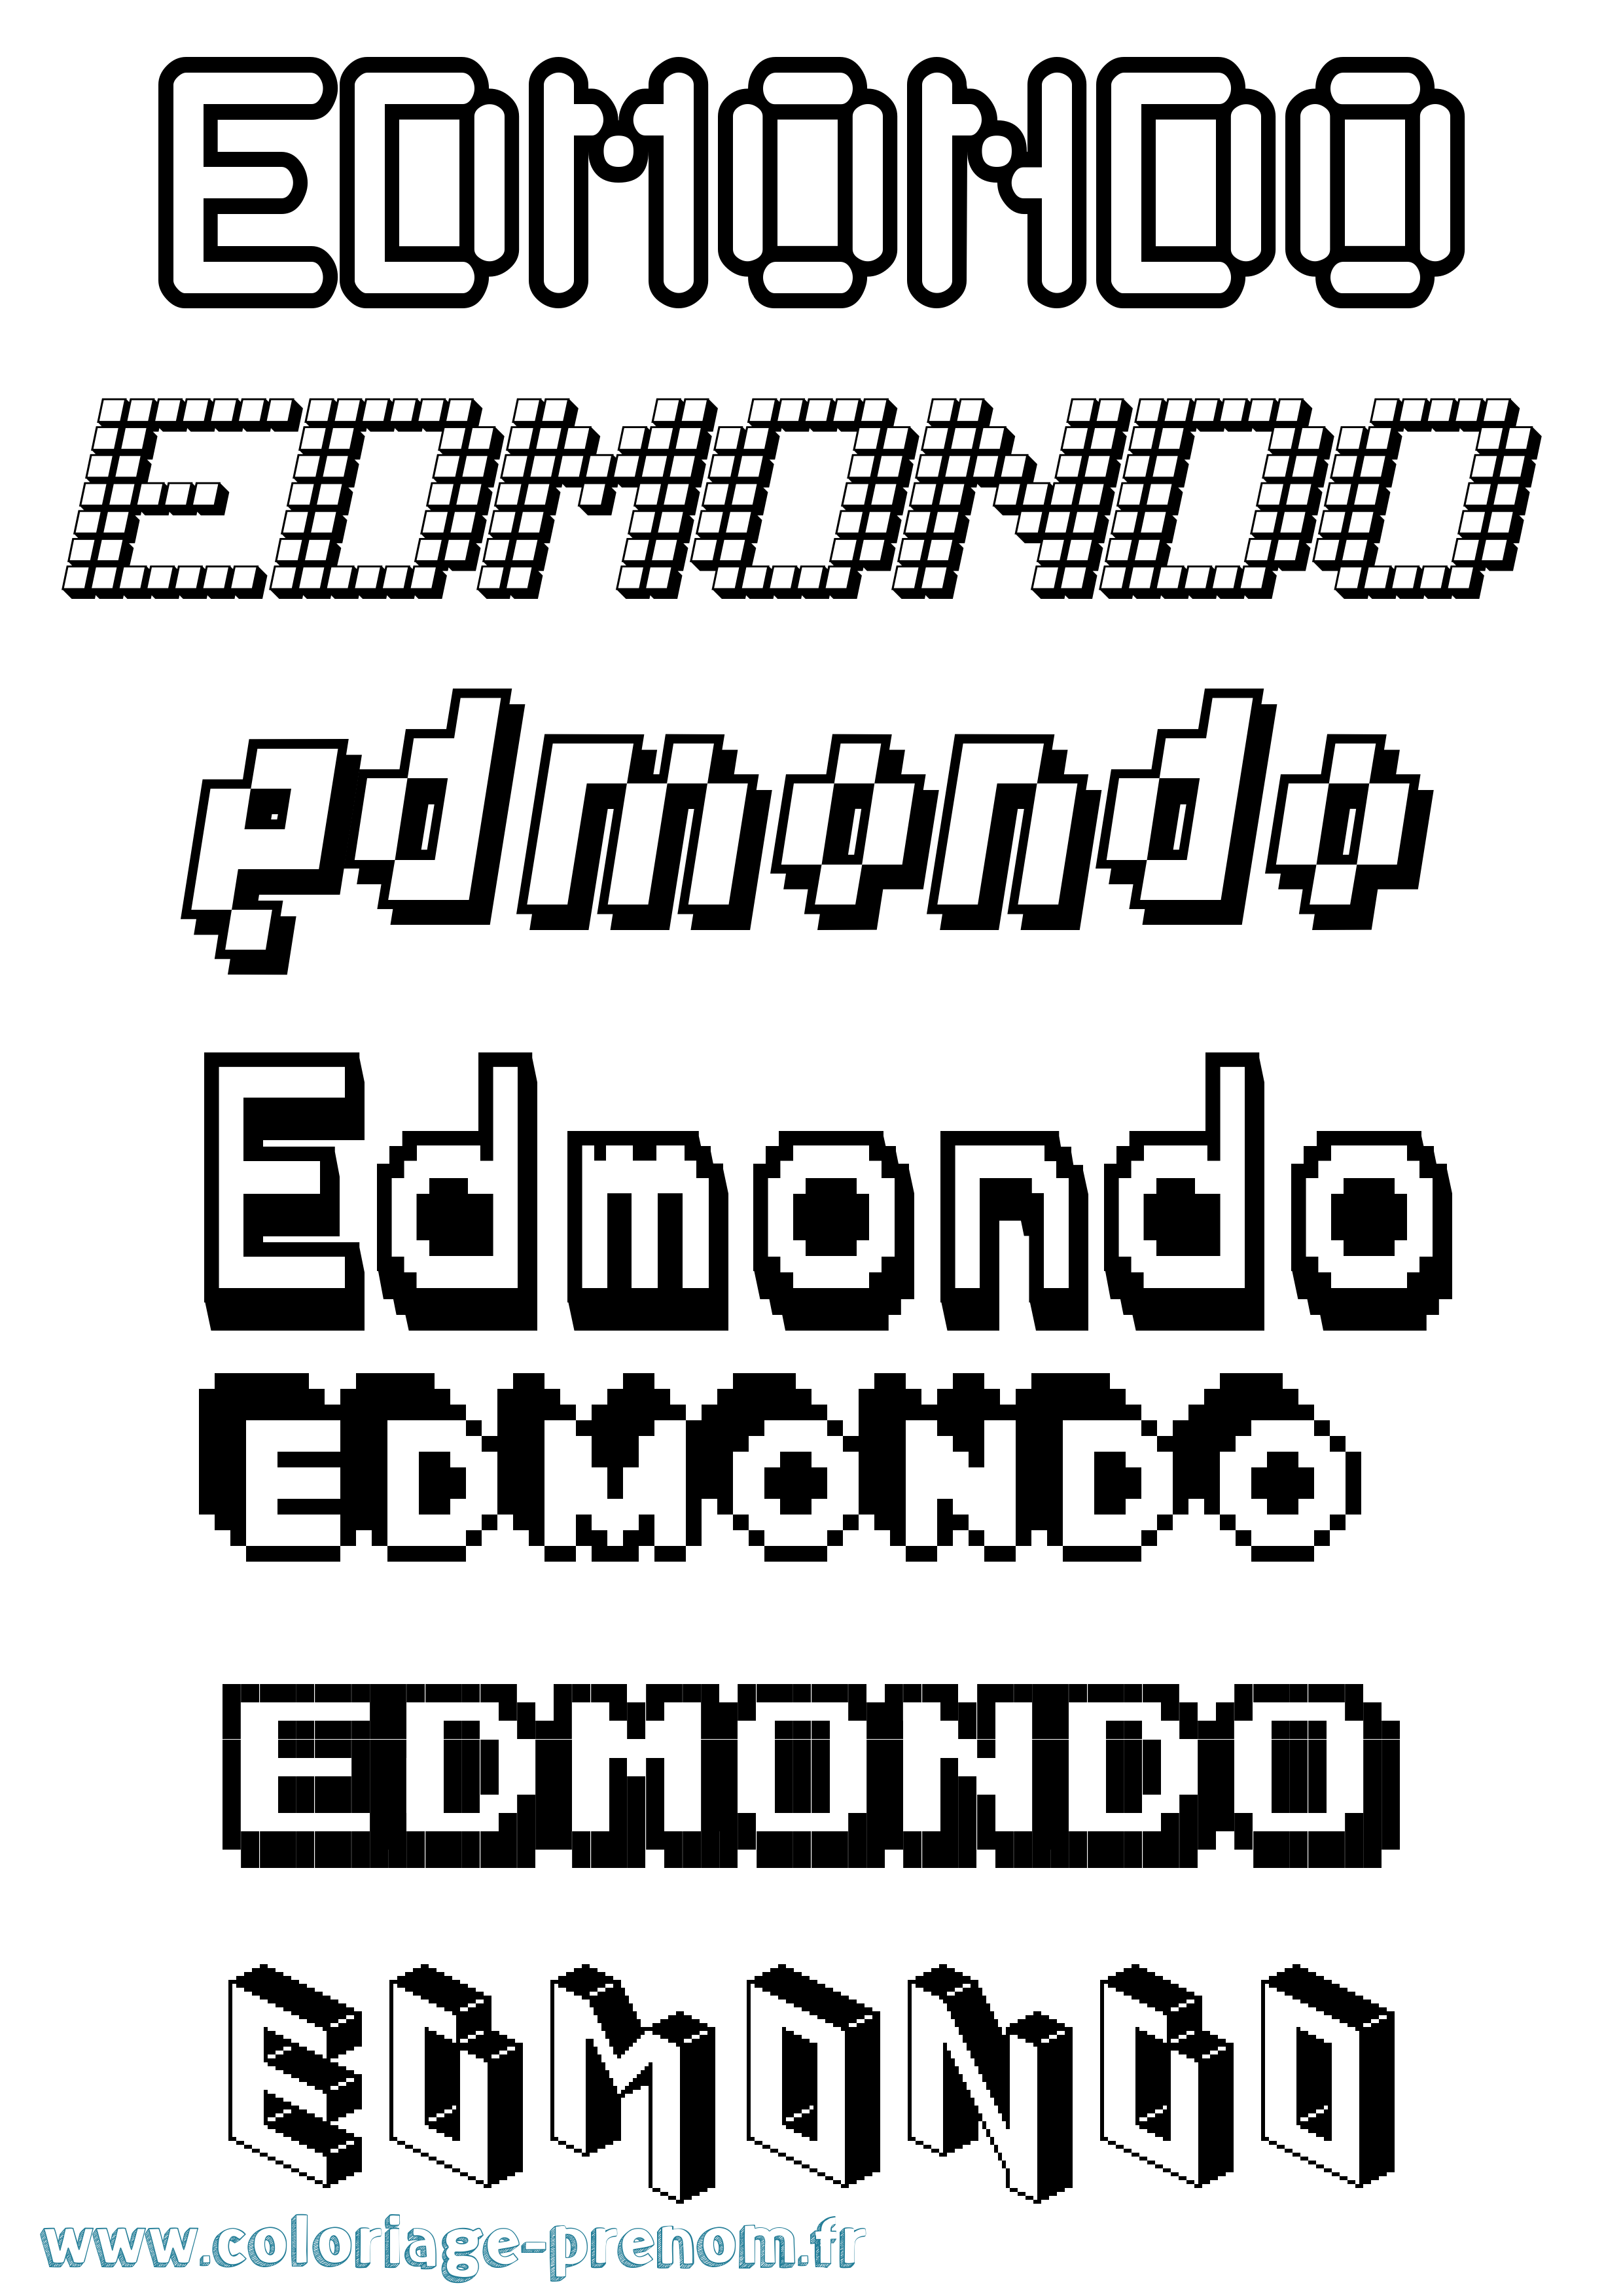 Coloriage prénom Edmondo Pixel